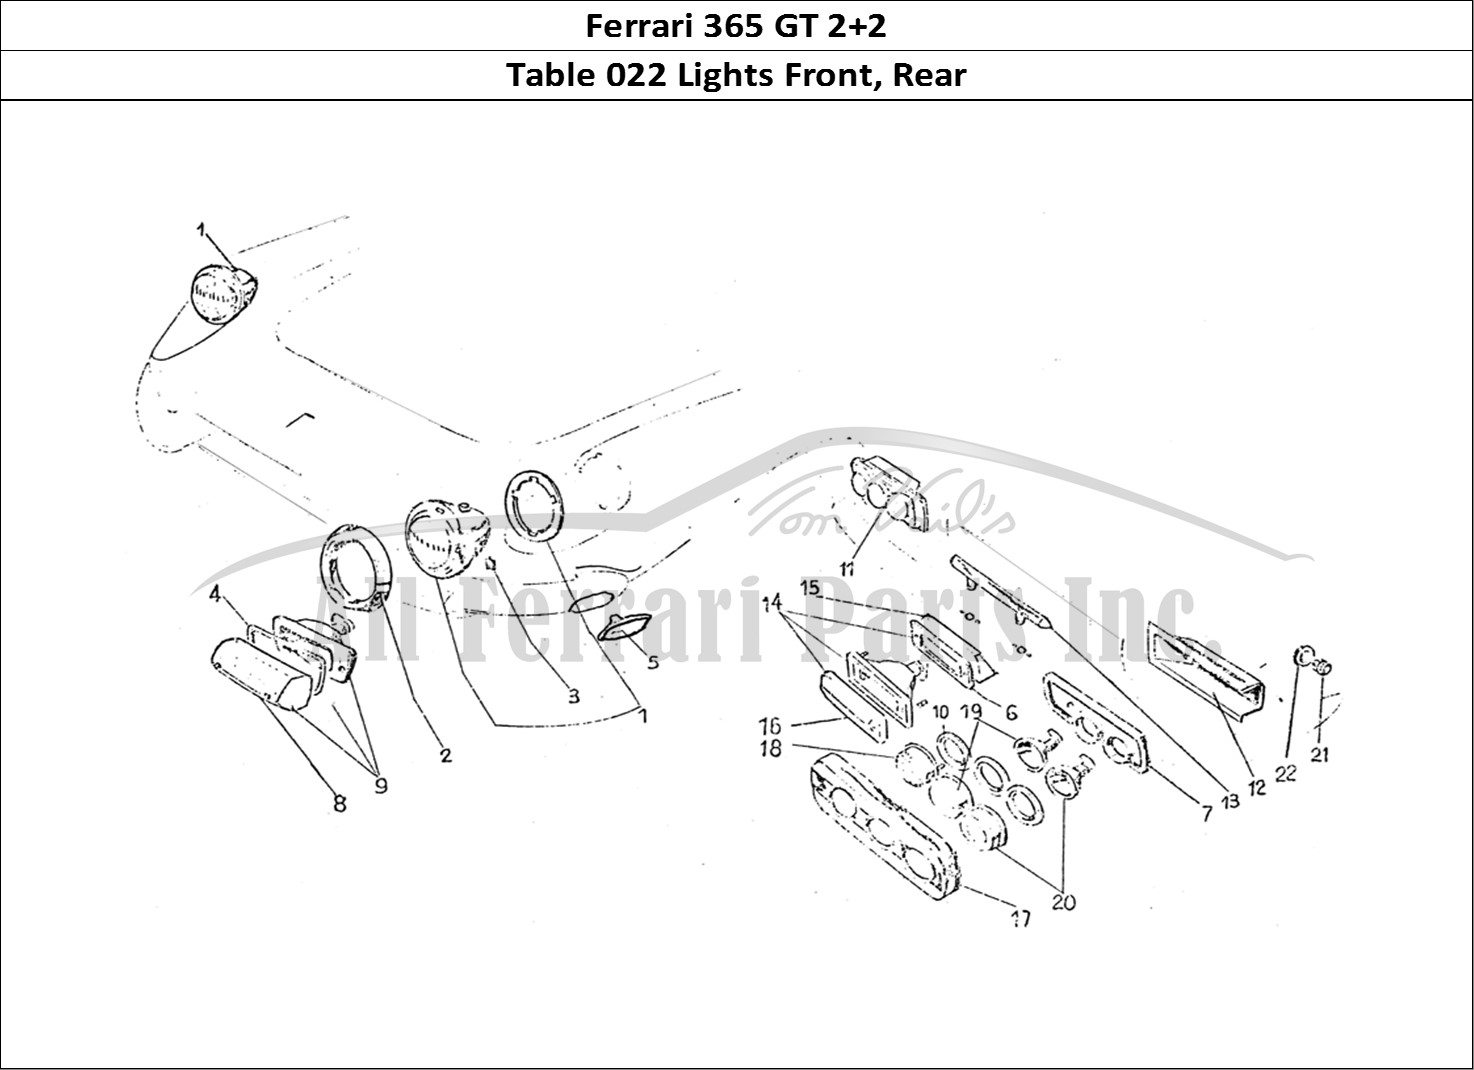 Ferrari Parts Ferrari 365 GT 2+2 (Coachwork) Page 022 Front & rear lights